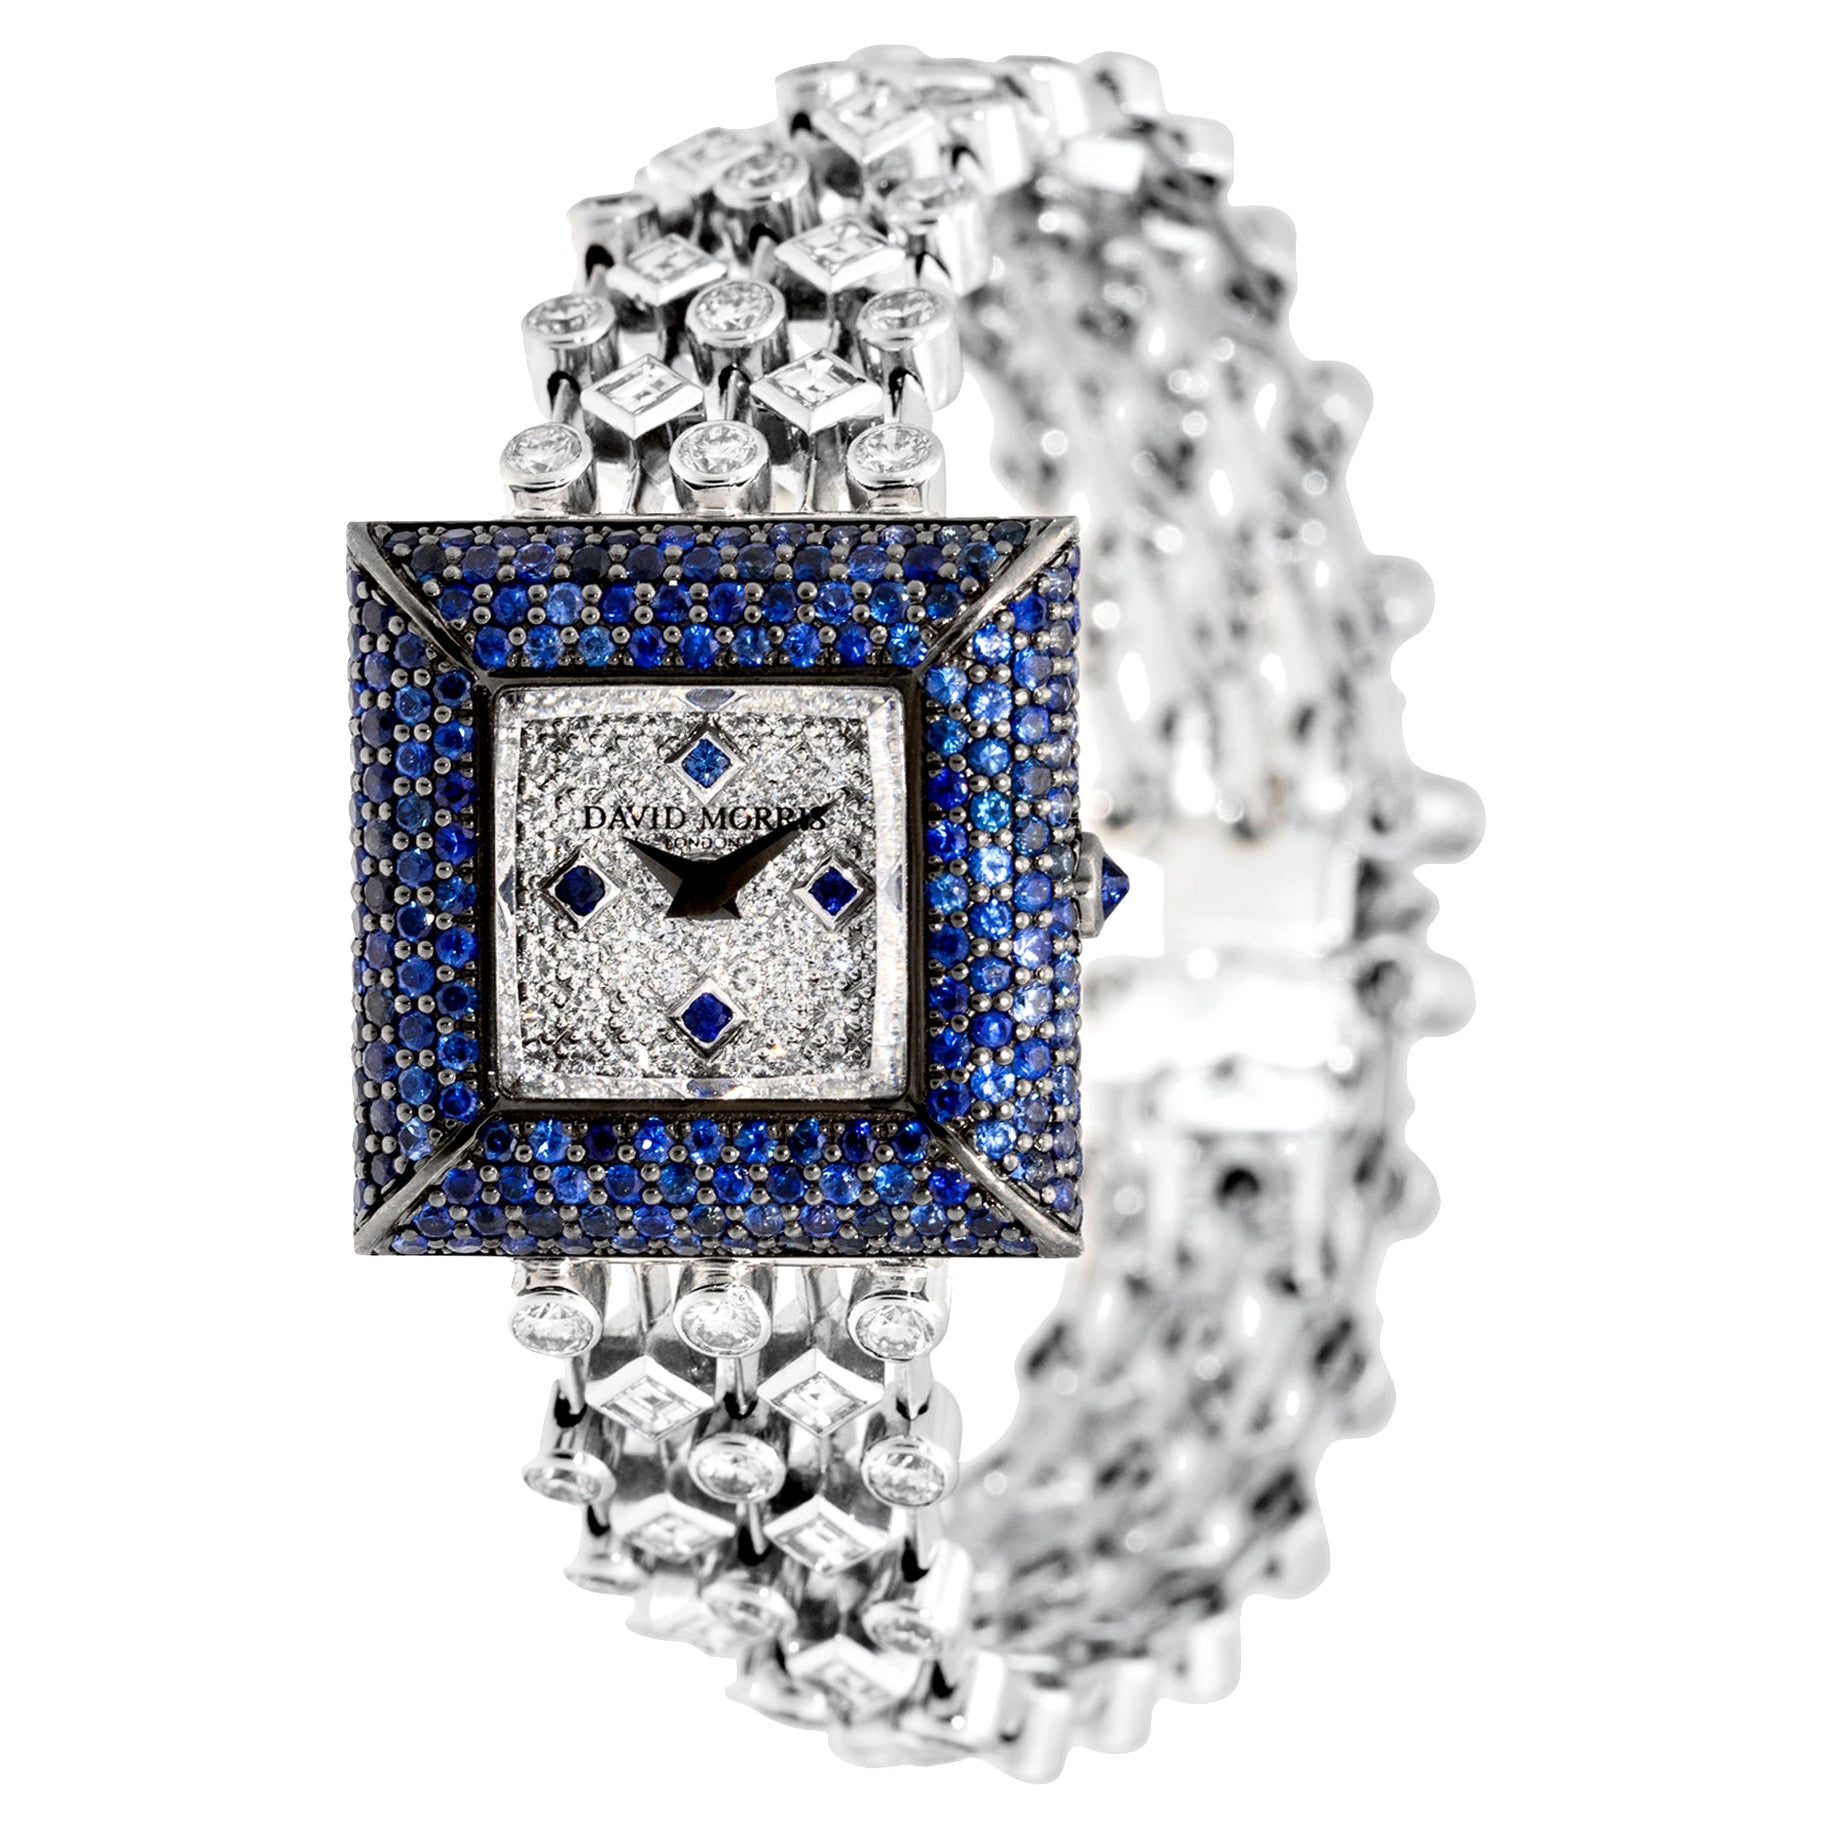 David Morris Blue Sapphire & White Diamond Jewellery Bracelet Watch For Sale